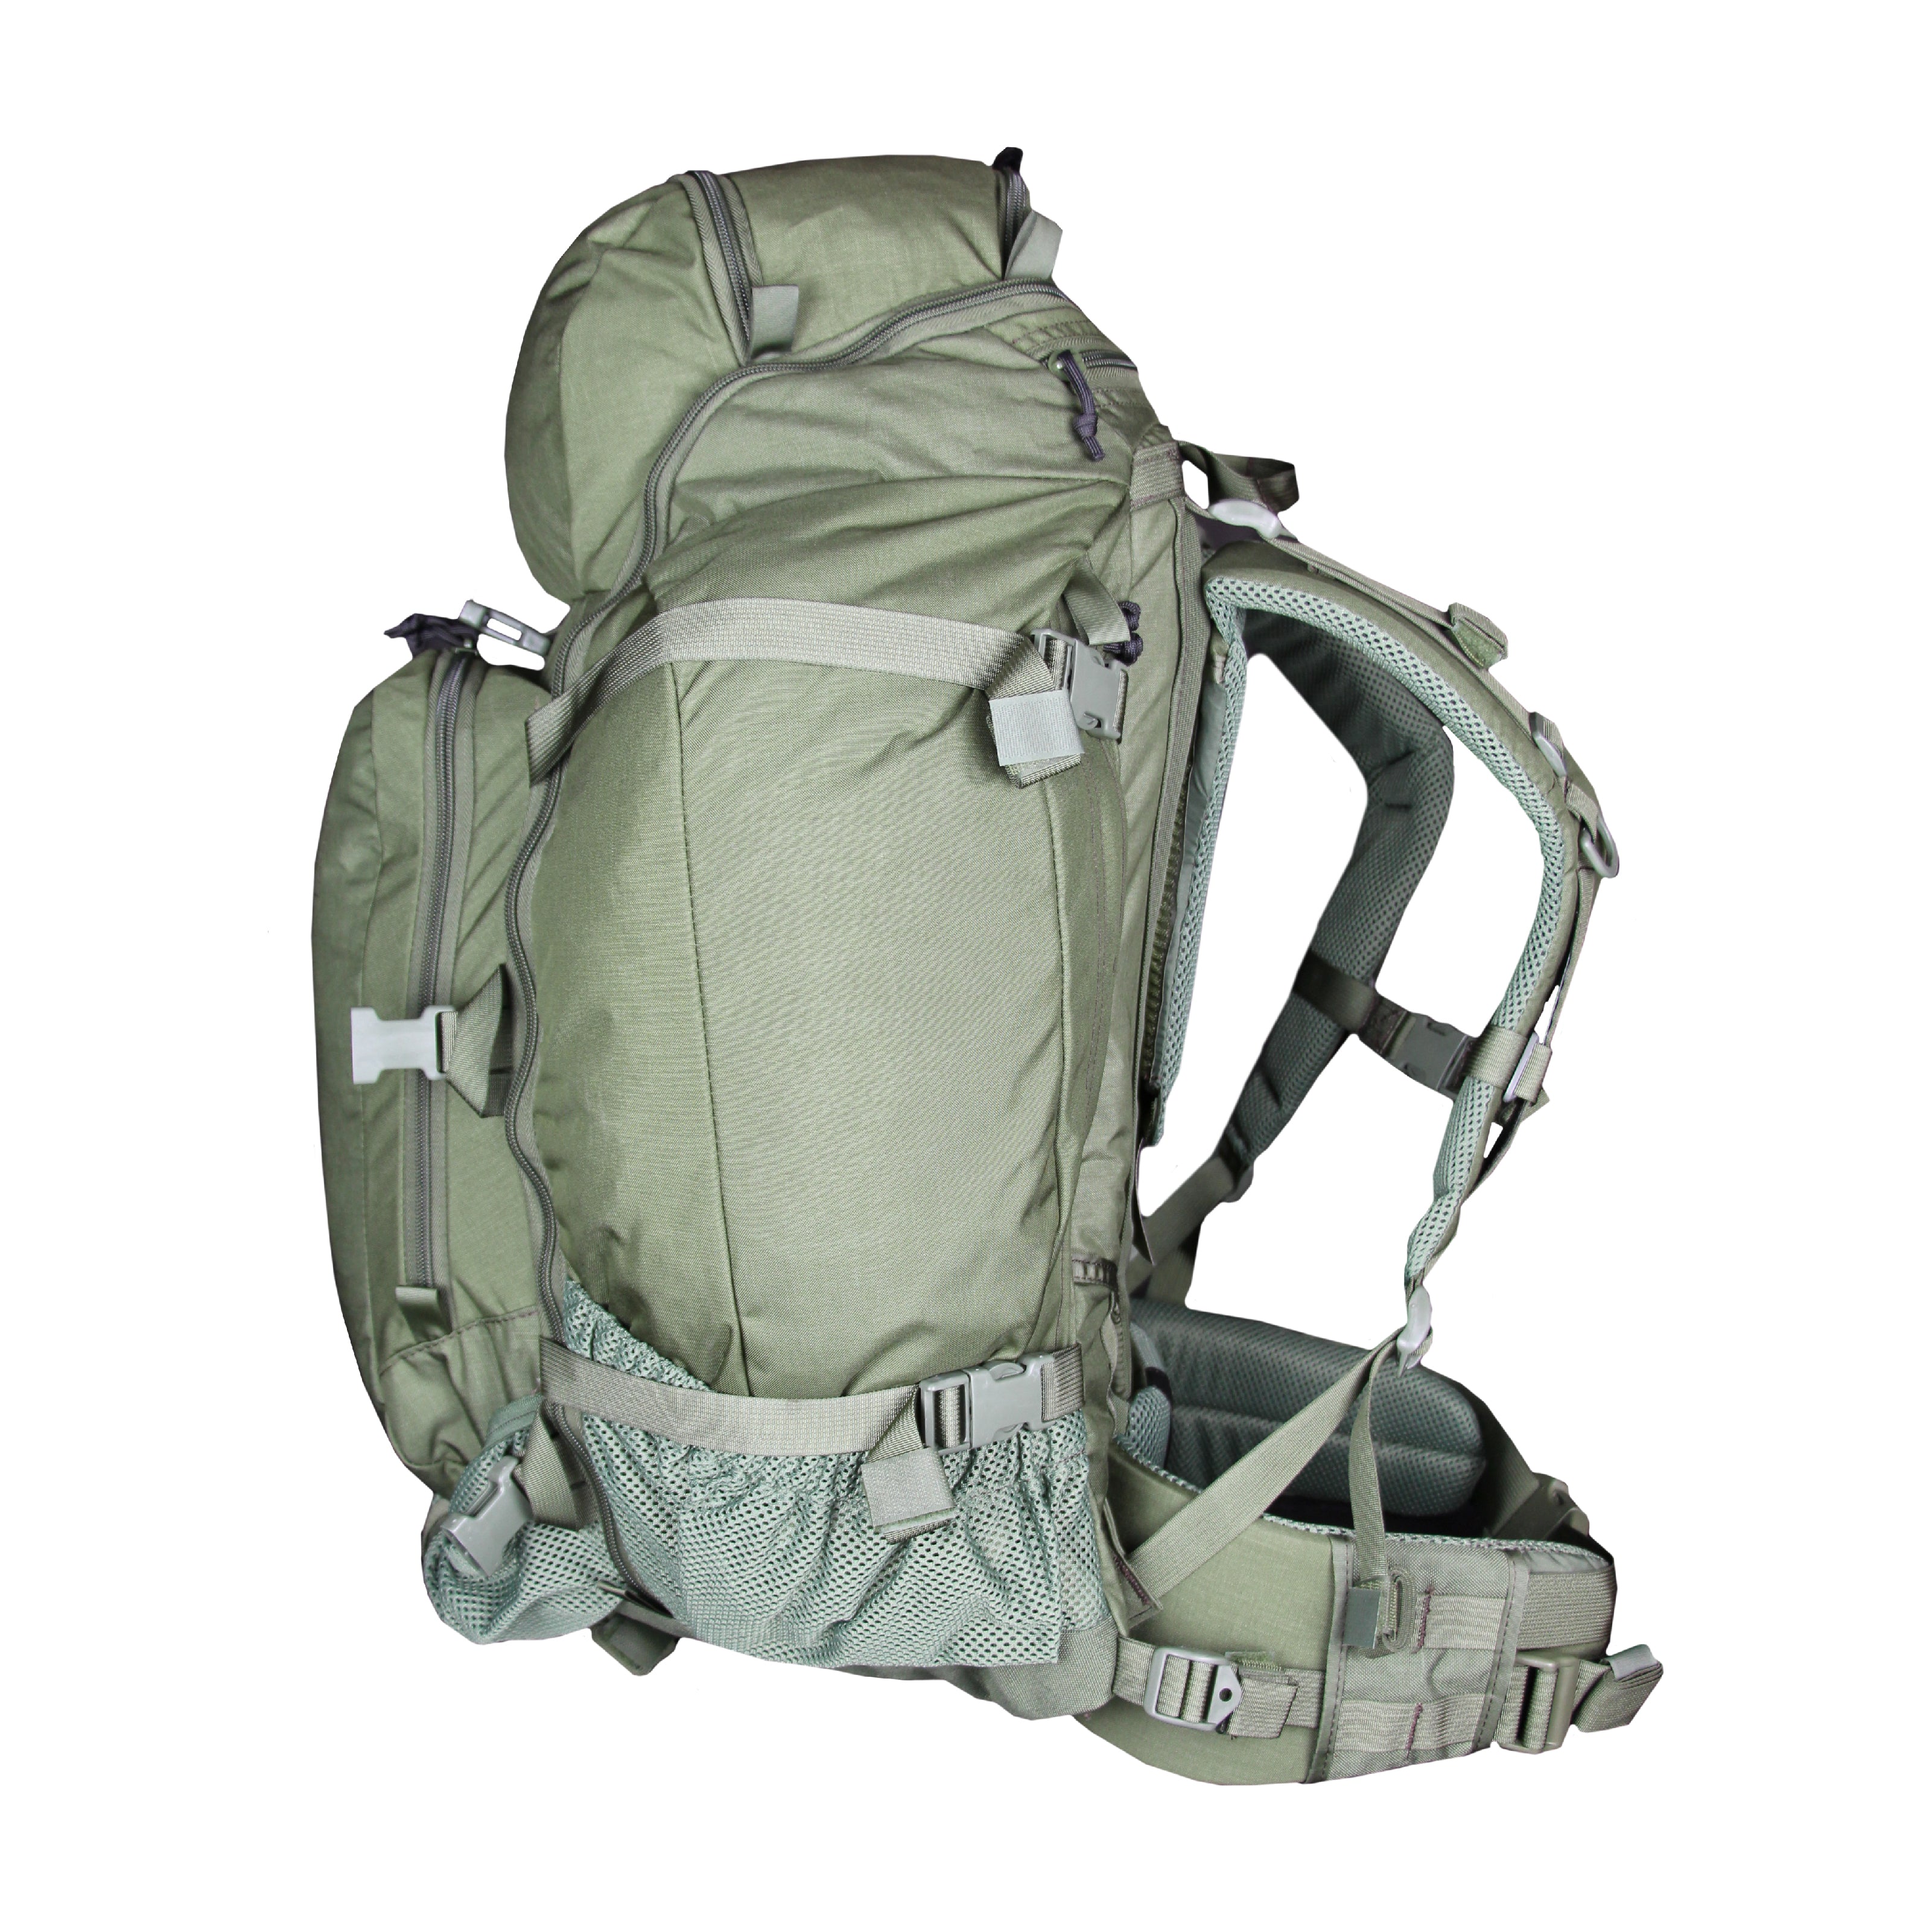 Maron Dolphin IDF official Amazon Backpack תיק אמאזון 65 ליטר מרעום דולפין